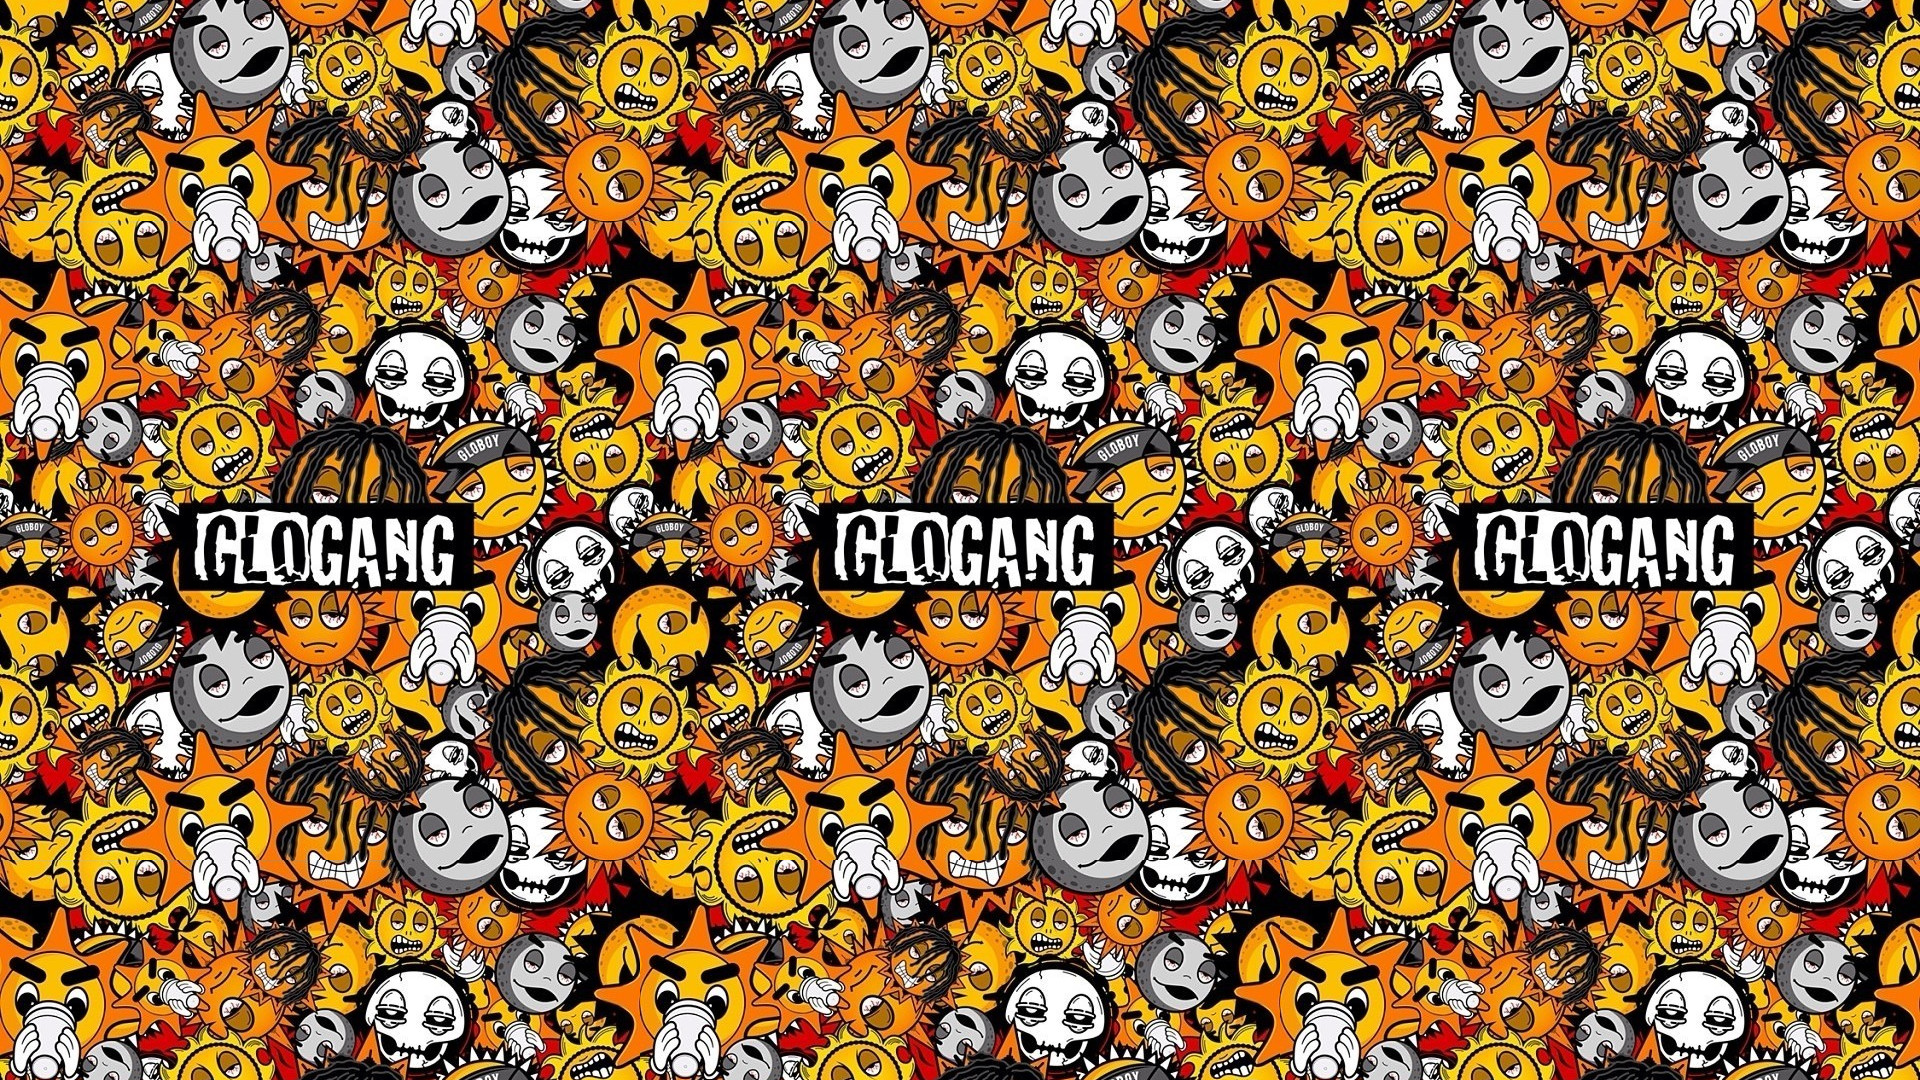 Glo Gang Wallpaper Related Keywords Suggestions – Glo Gang Wallpaper